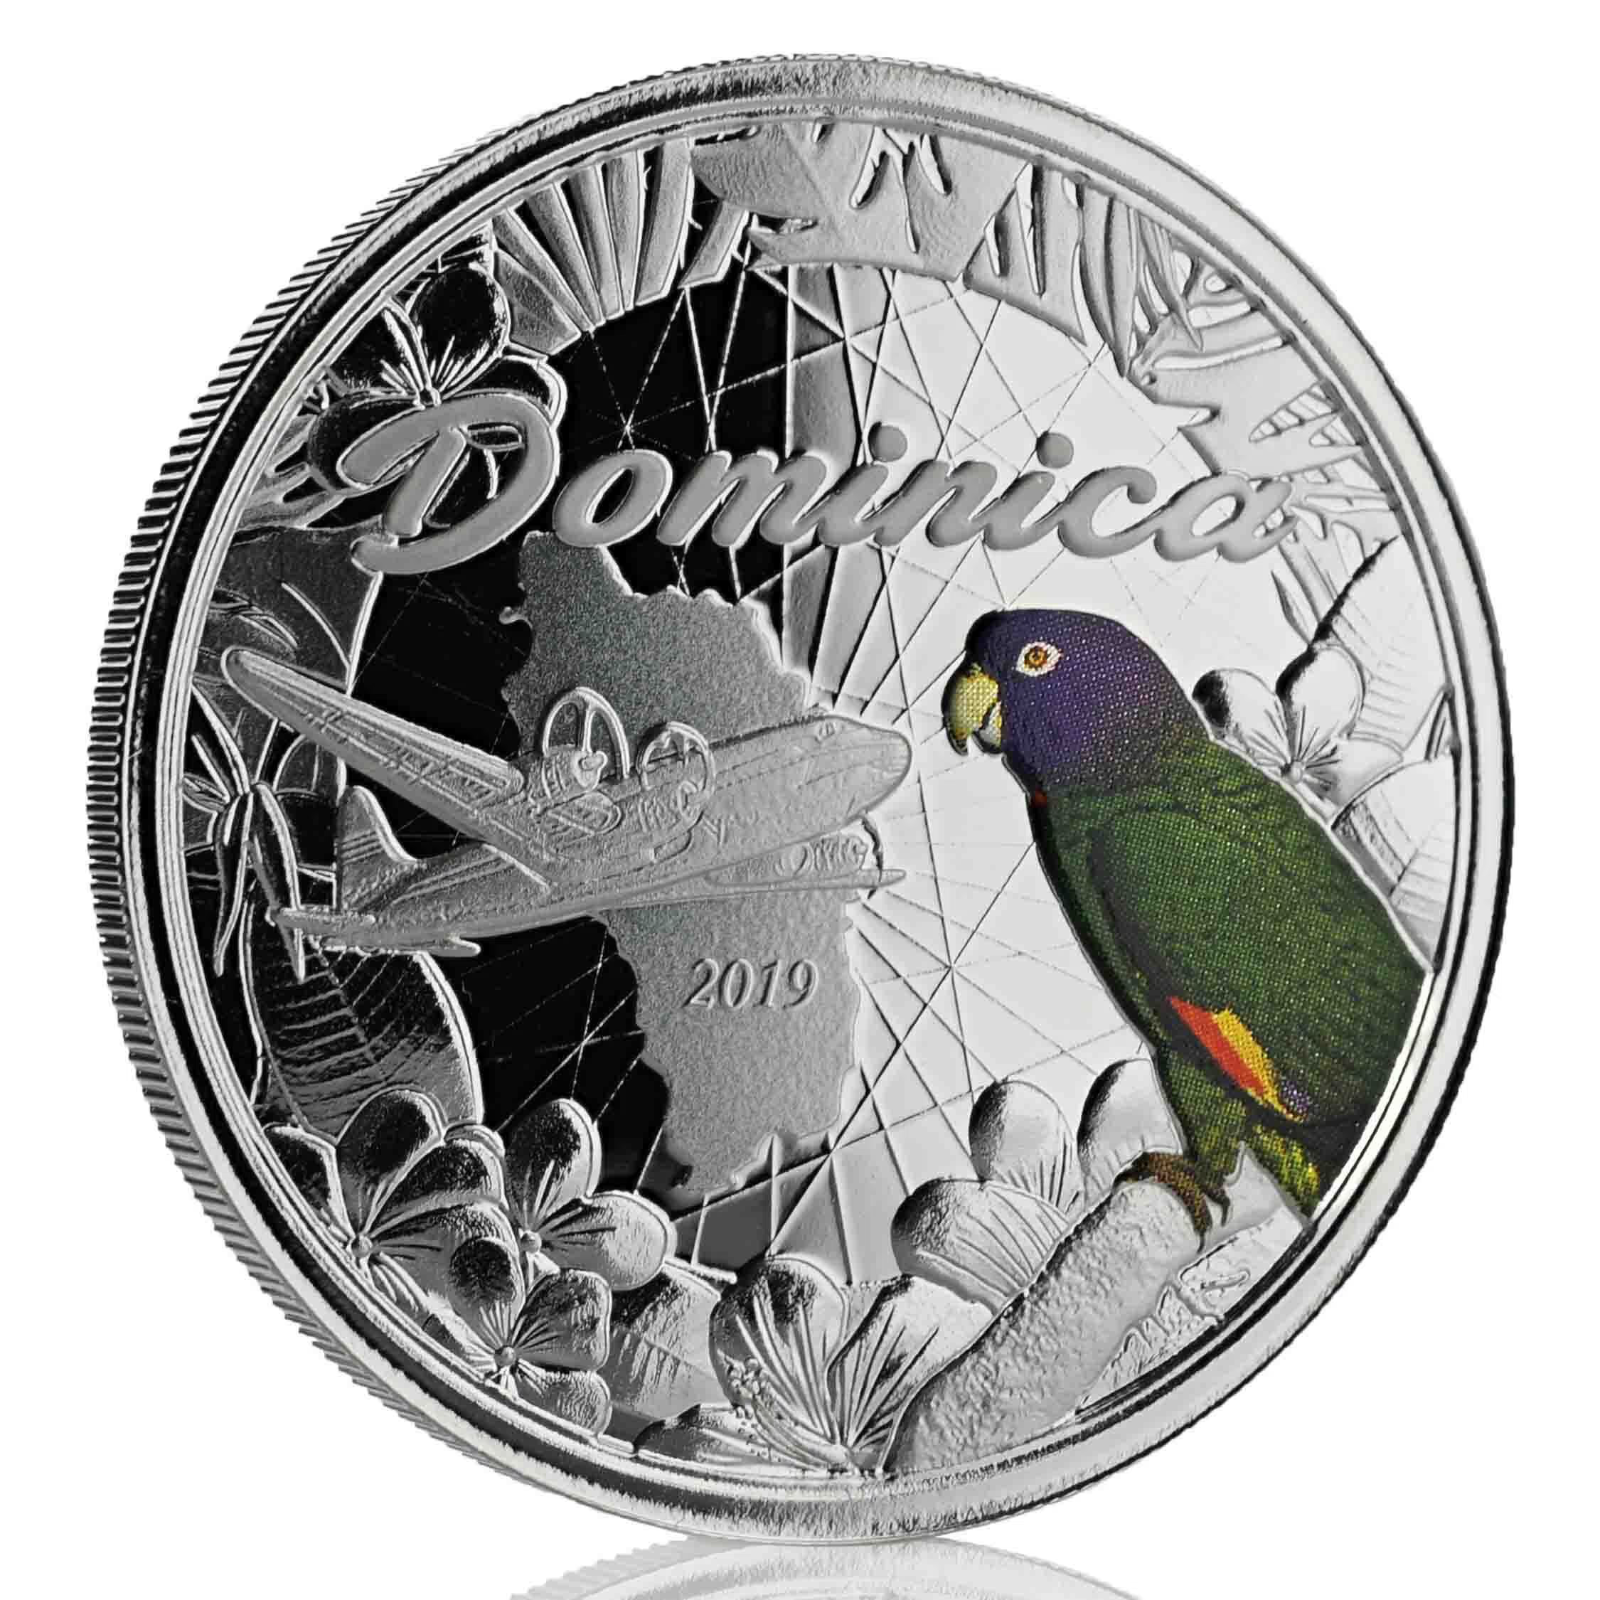 1 Oz Silver Coin 2019 Dominica $2 Scottsdale Mint Color Proof - The Nature Isle-classypw.com-1